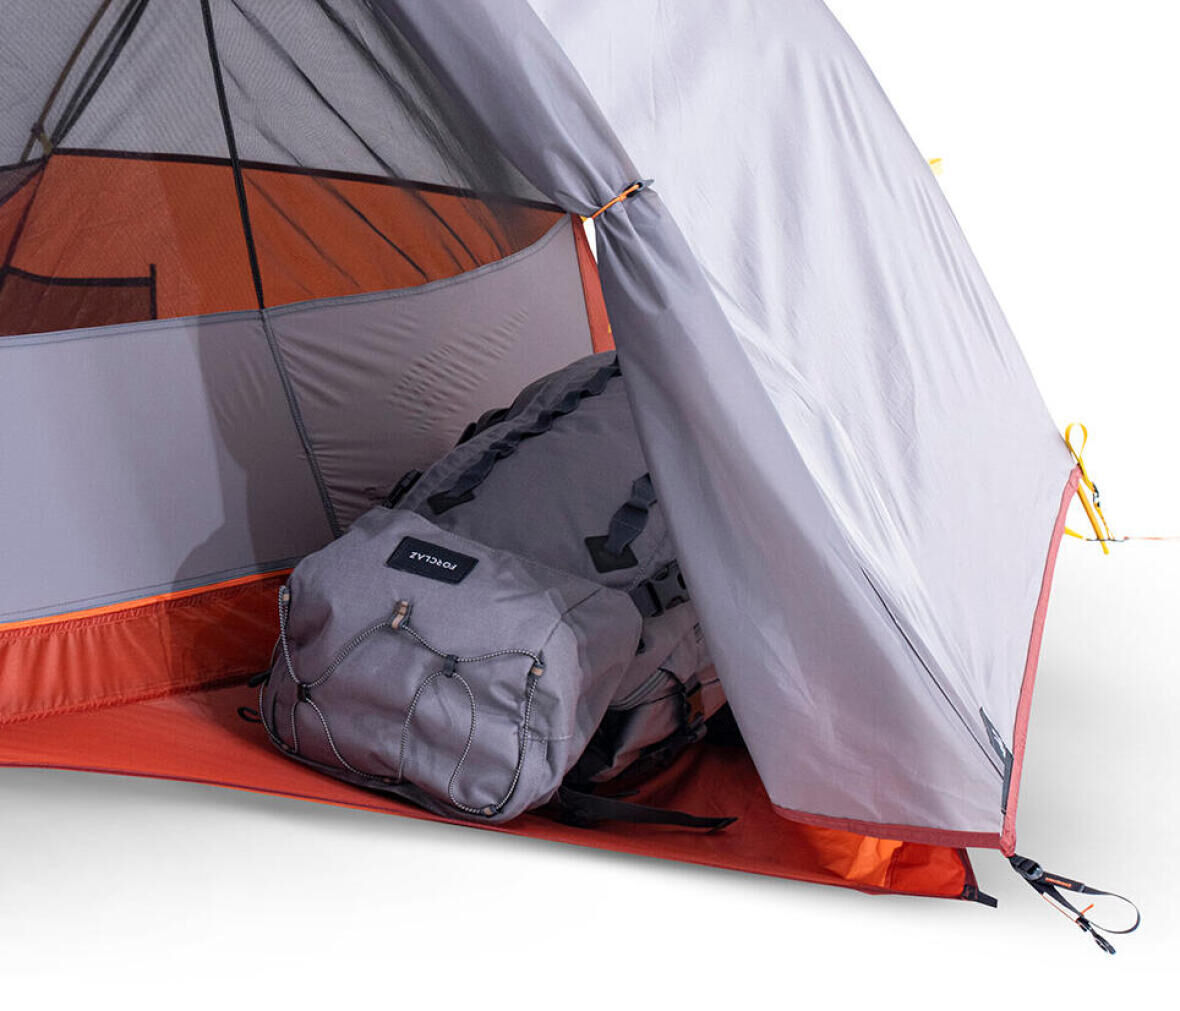 Habitability of the tent